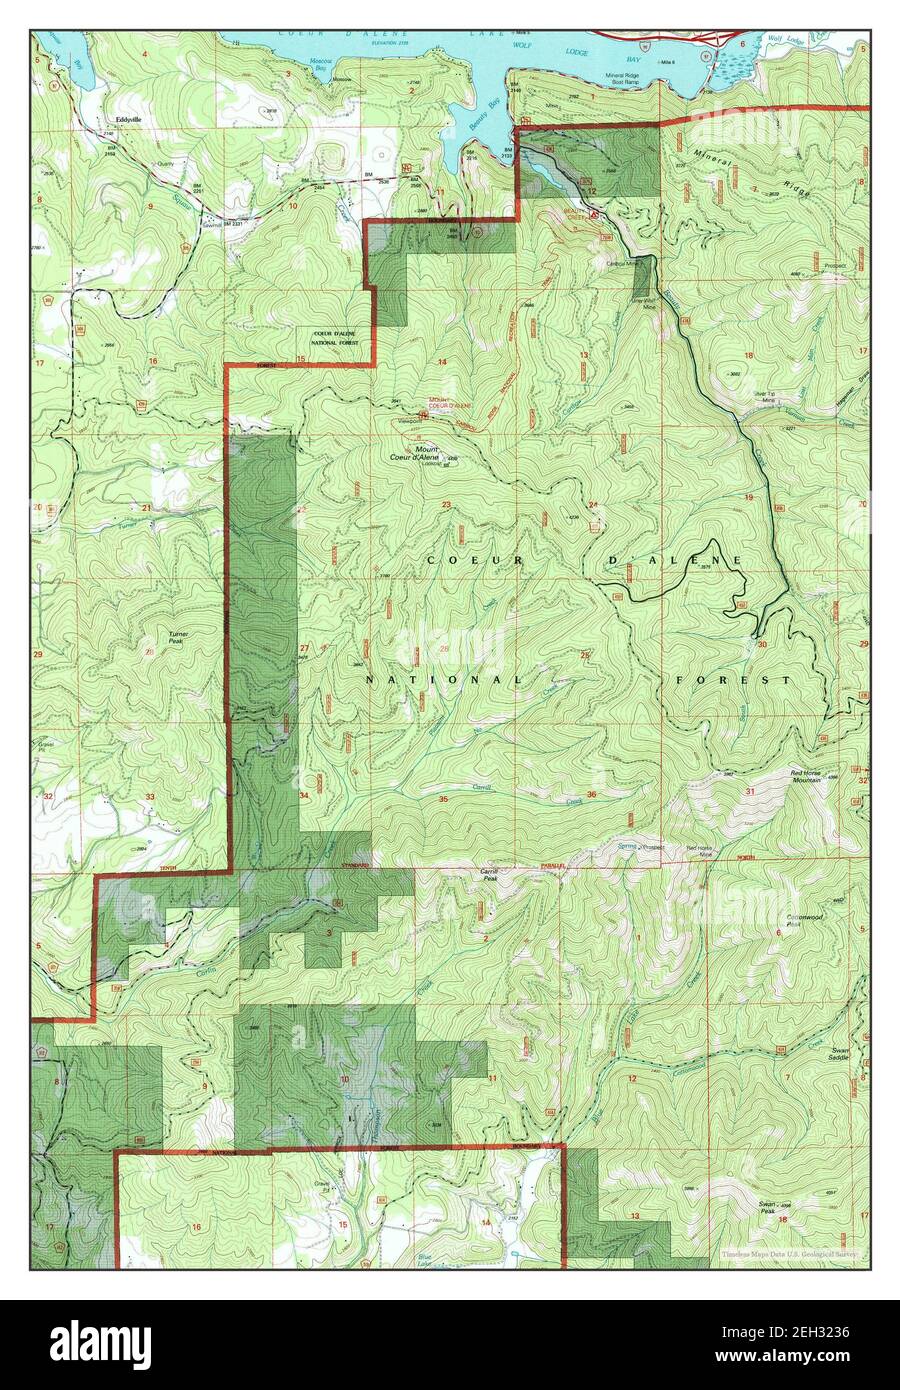 Mount Coeur DAlene, Idaho, map 1996, 1:24000, United States of America by Timeless Maps, data U.S. Geological Survey Stock Photo